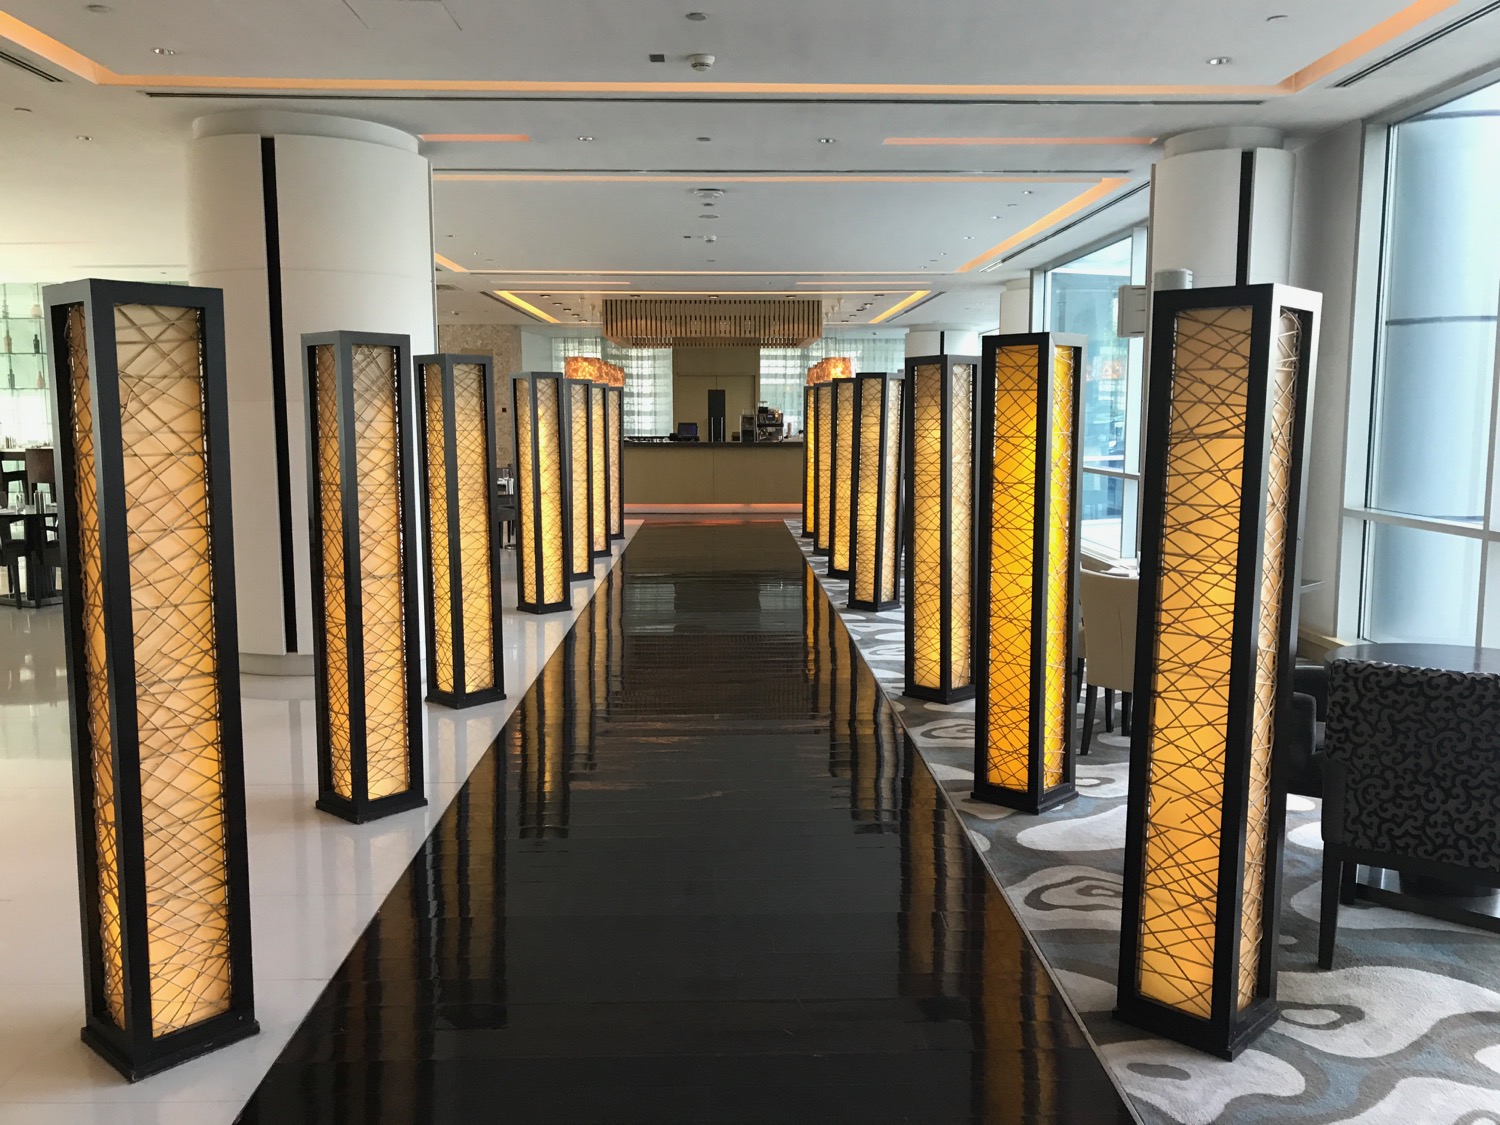 a long hallway with tall pillars